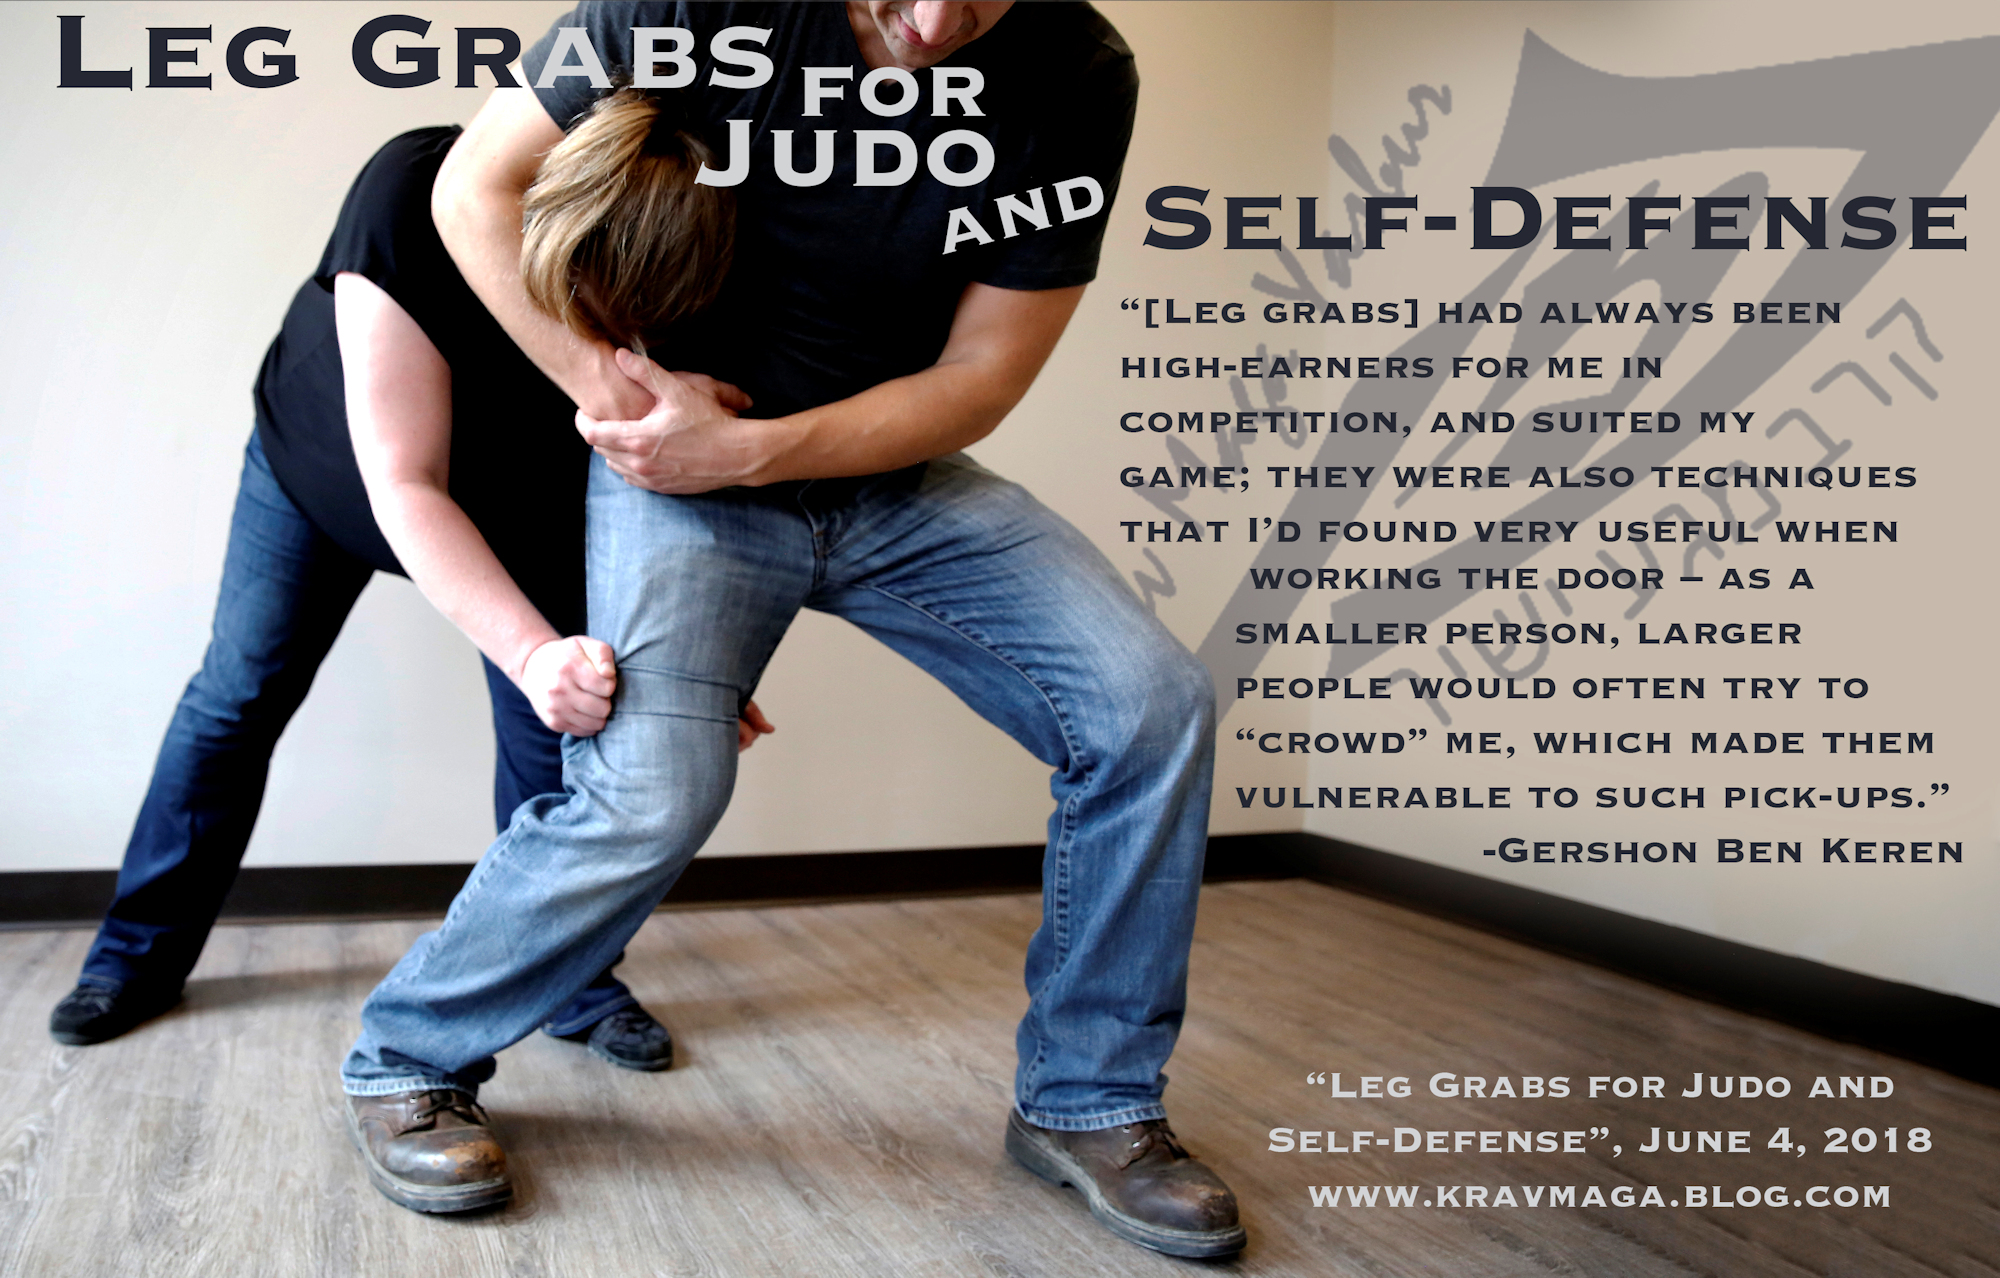 Blog About Leg Grabs For Judo & Self-Defense